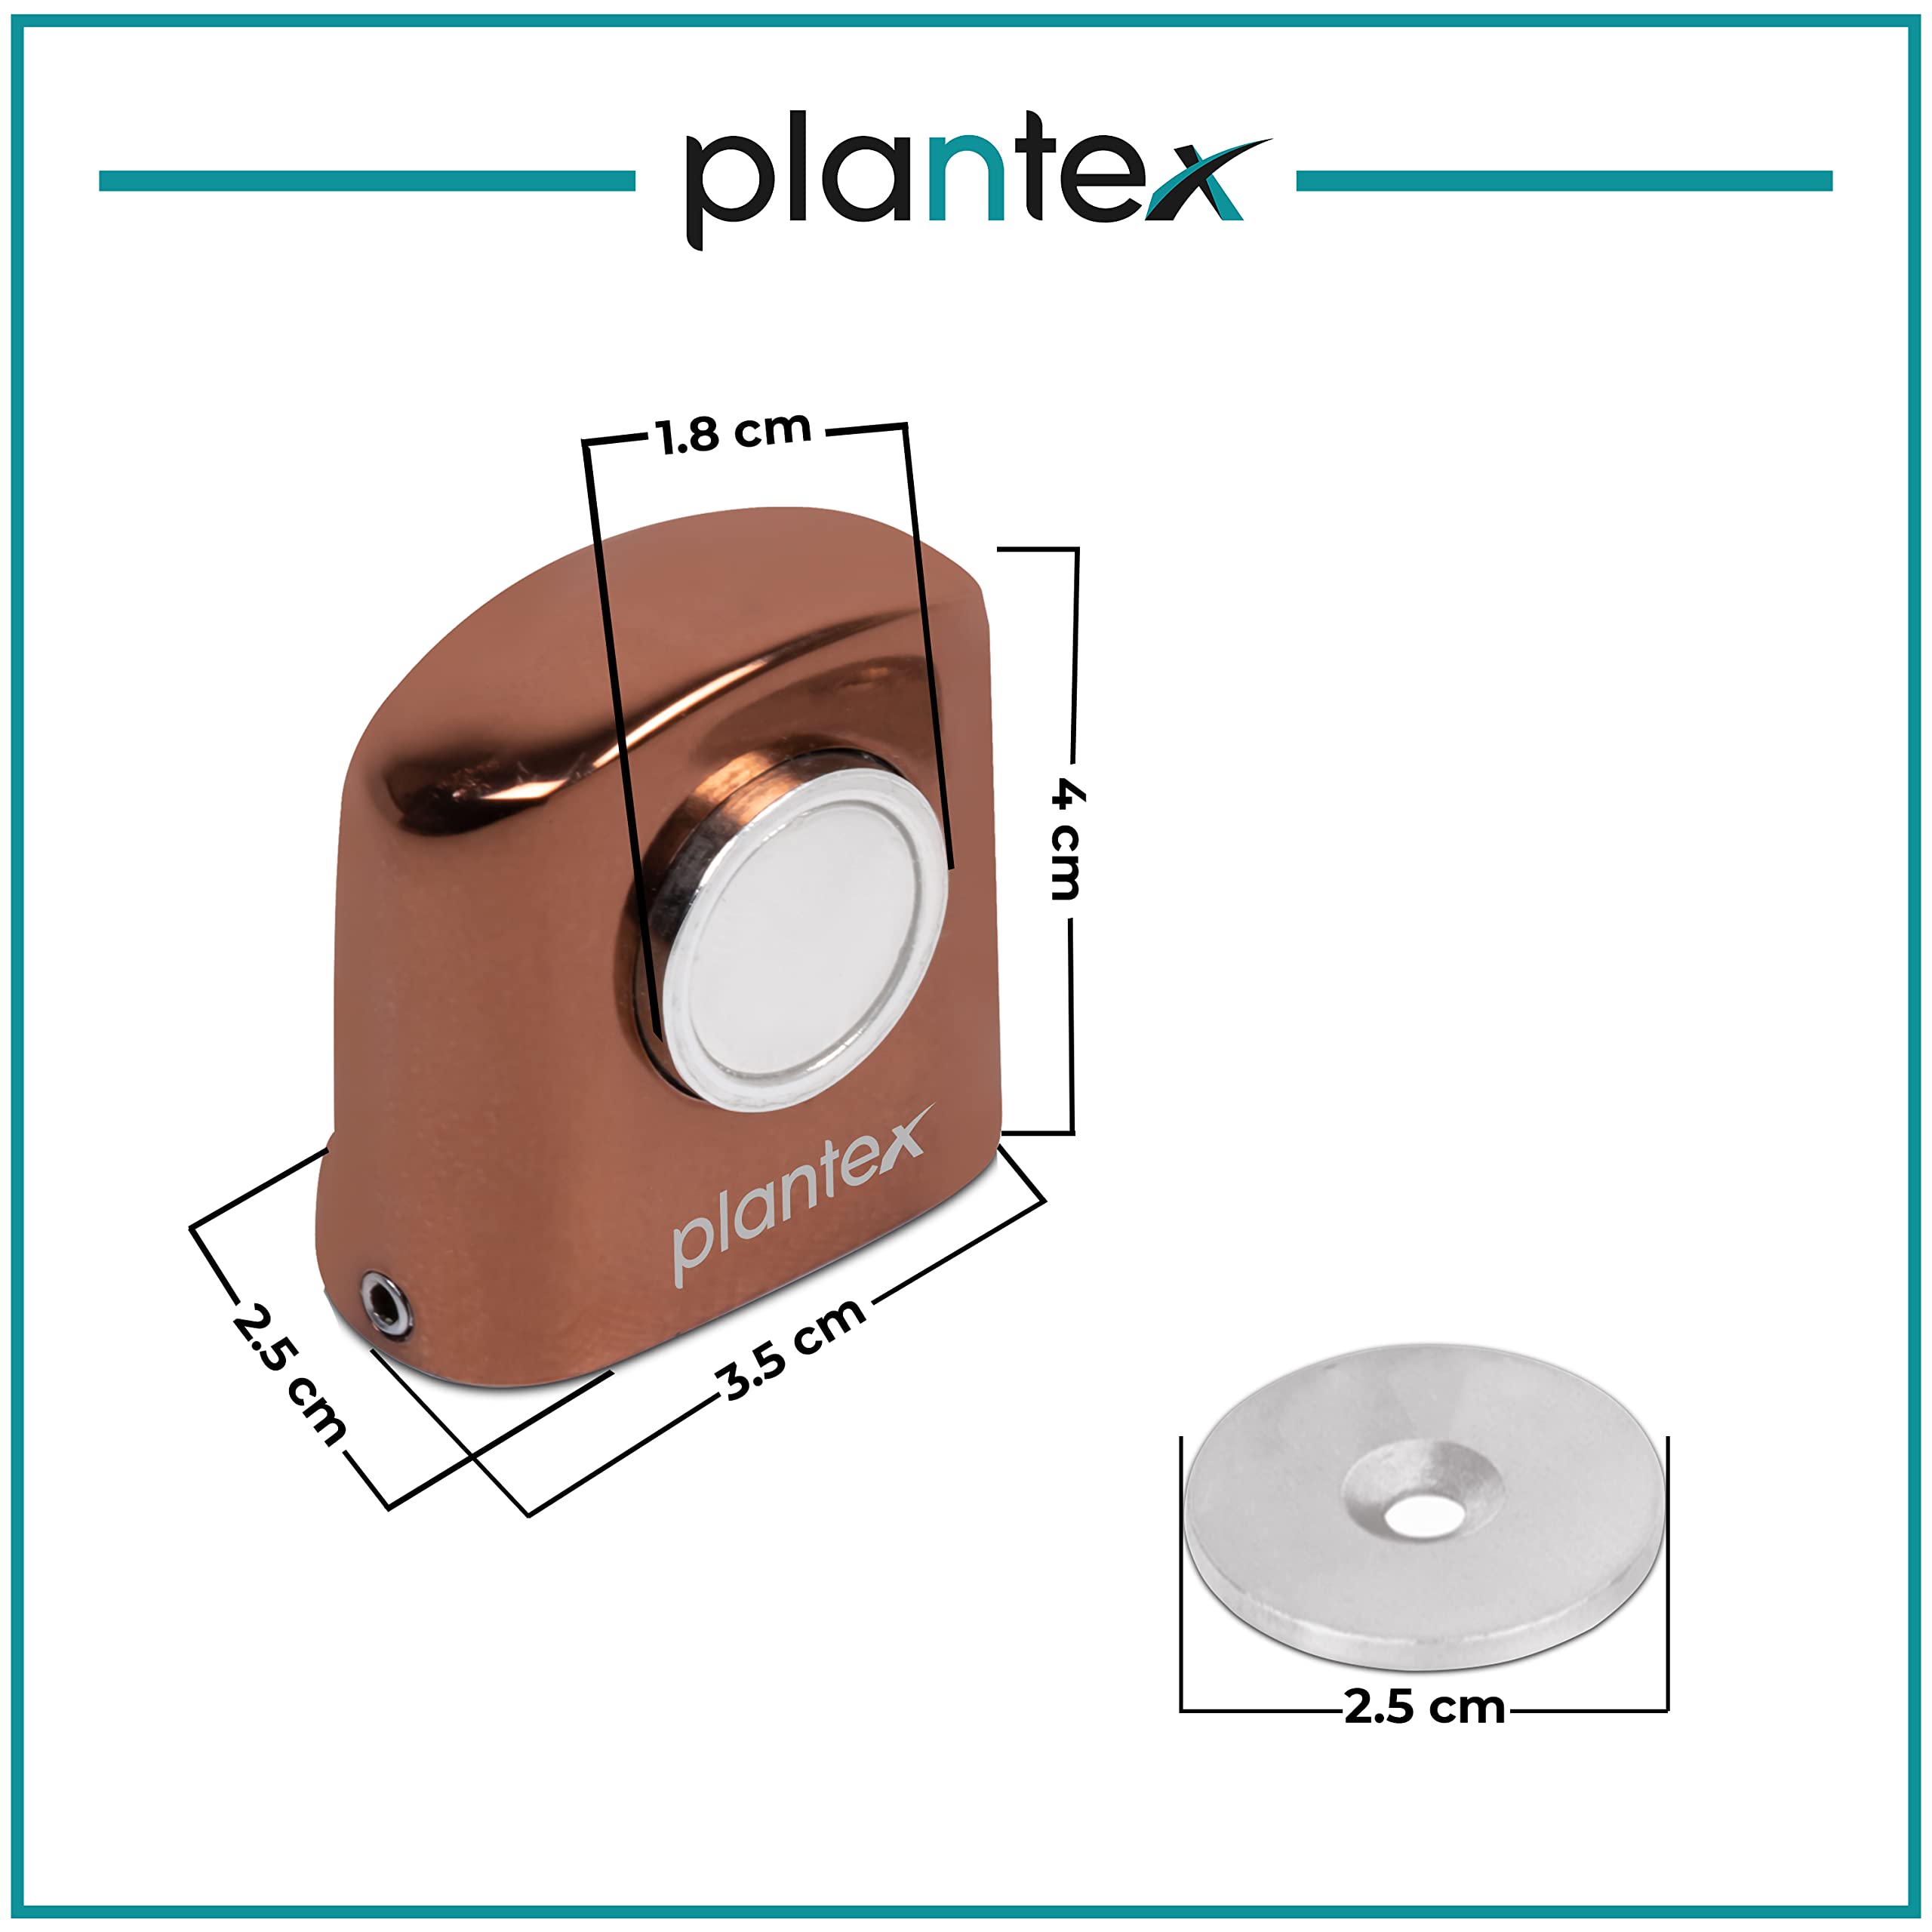 Plantex Heavy Duty Door Magnet Stopper/Door Catch Holder for Home/Office/Hotel, Floor Mounted Soft-Catcher to Hold Wooden/Glass/PVC Door - Pack of 20 (193 - Rose Gold)